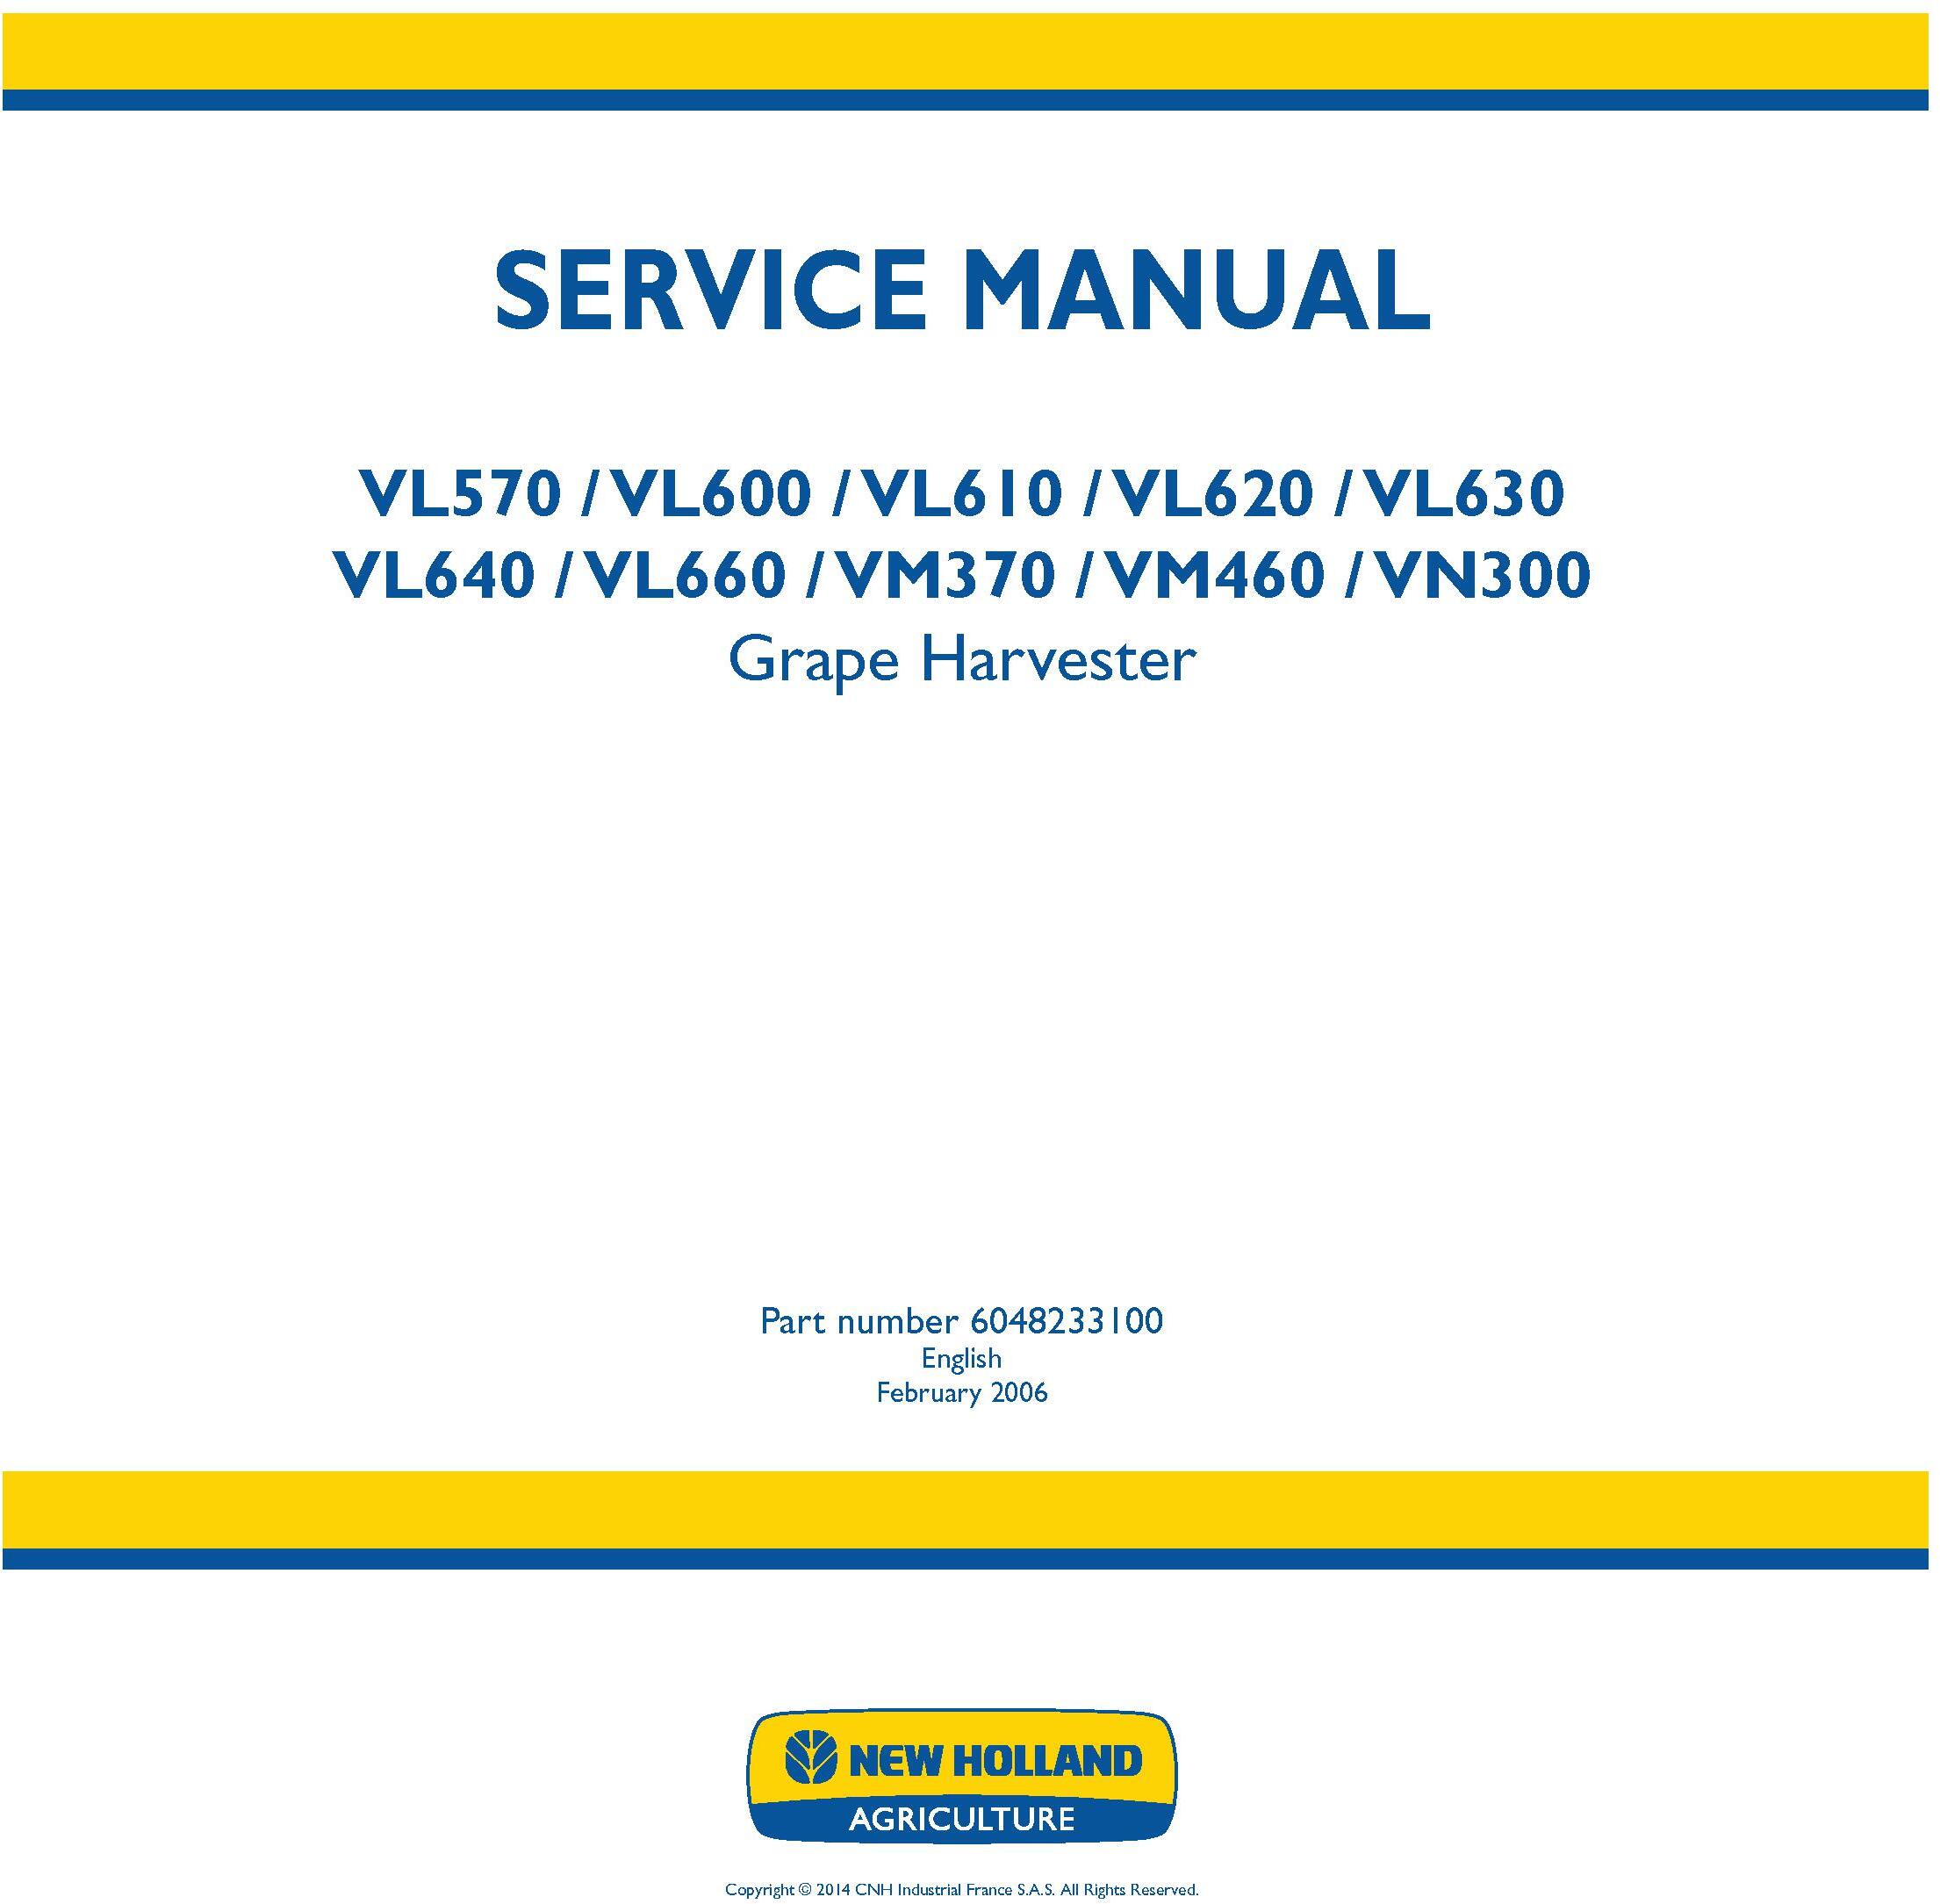 New Holland VL570,VL600,VL610,VL620,VL630,VL640,VL660, VM370,VM460,VN300 Grape Harvester Service Manual